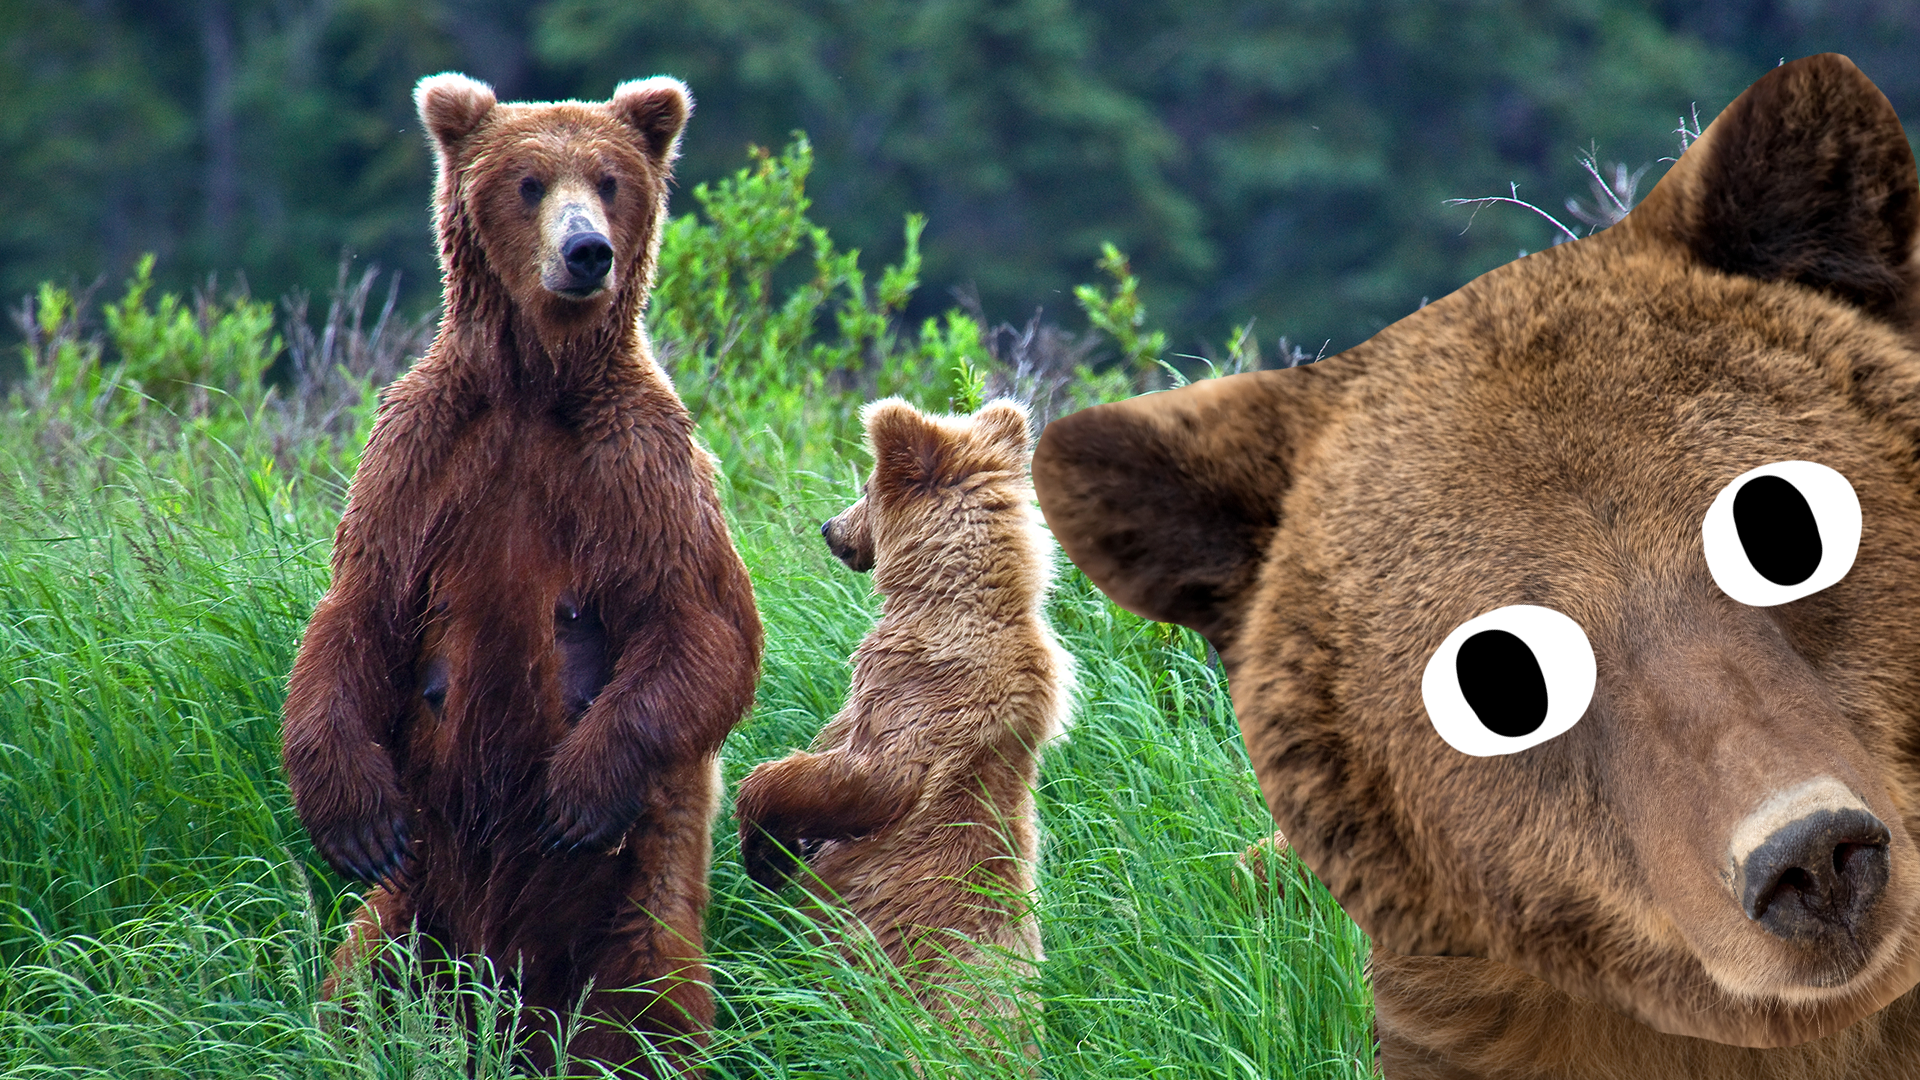 Bears in the wild and Beano bear 